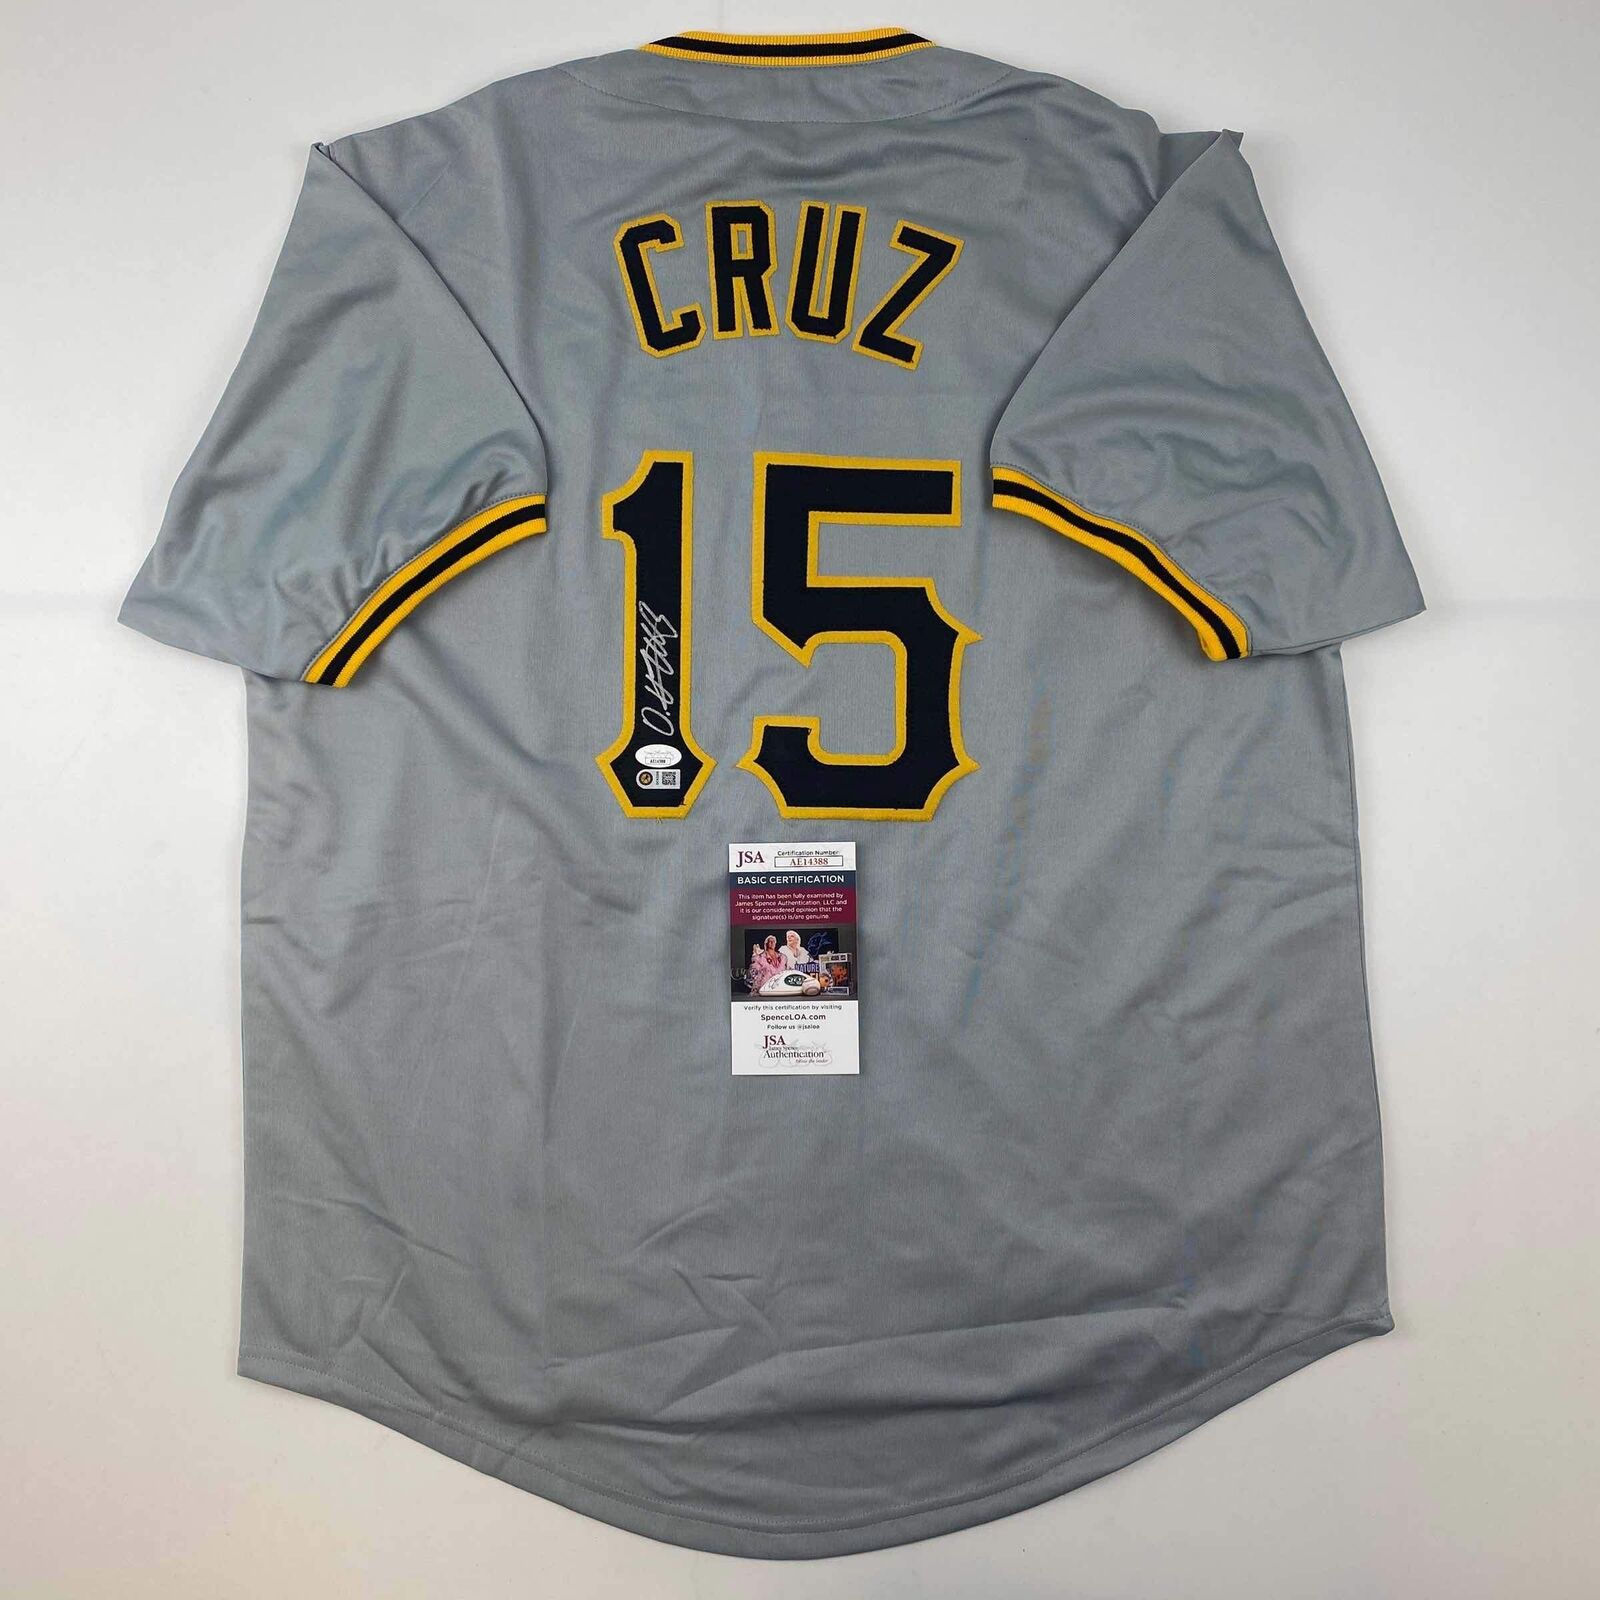 Autographed/Signed Oneil Cruz Pittsburgh Grey Baseball Jersey JSA COA